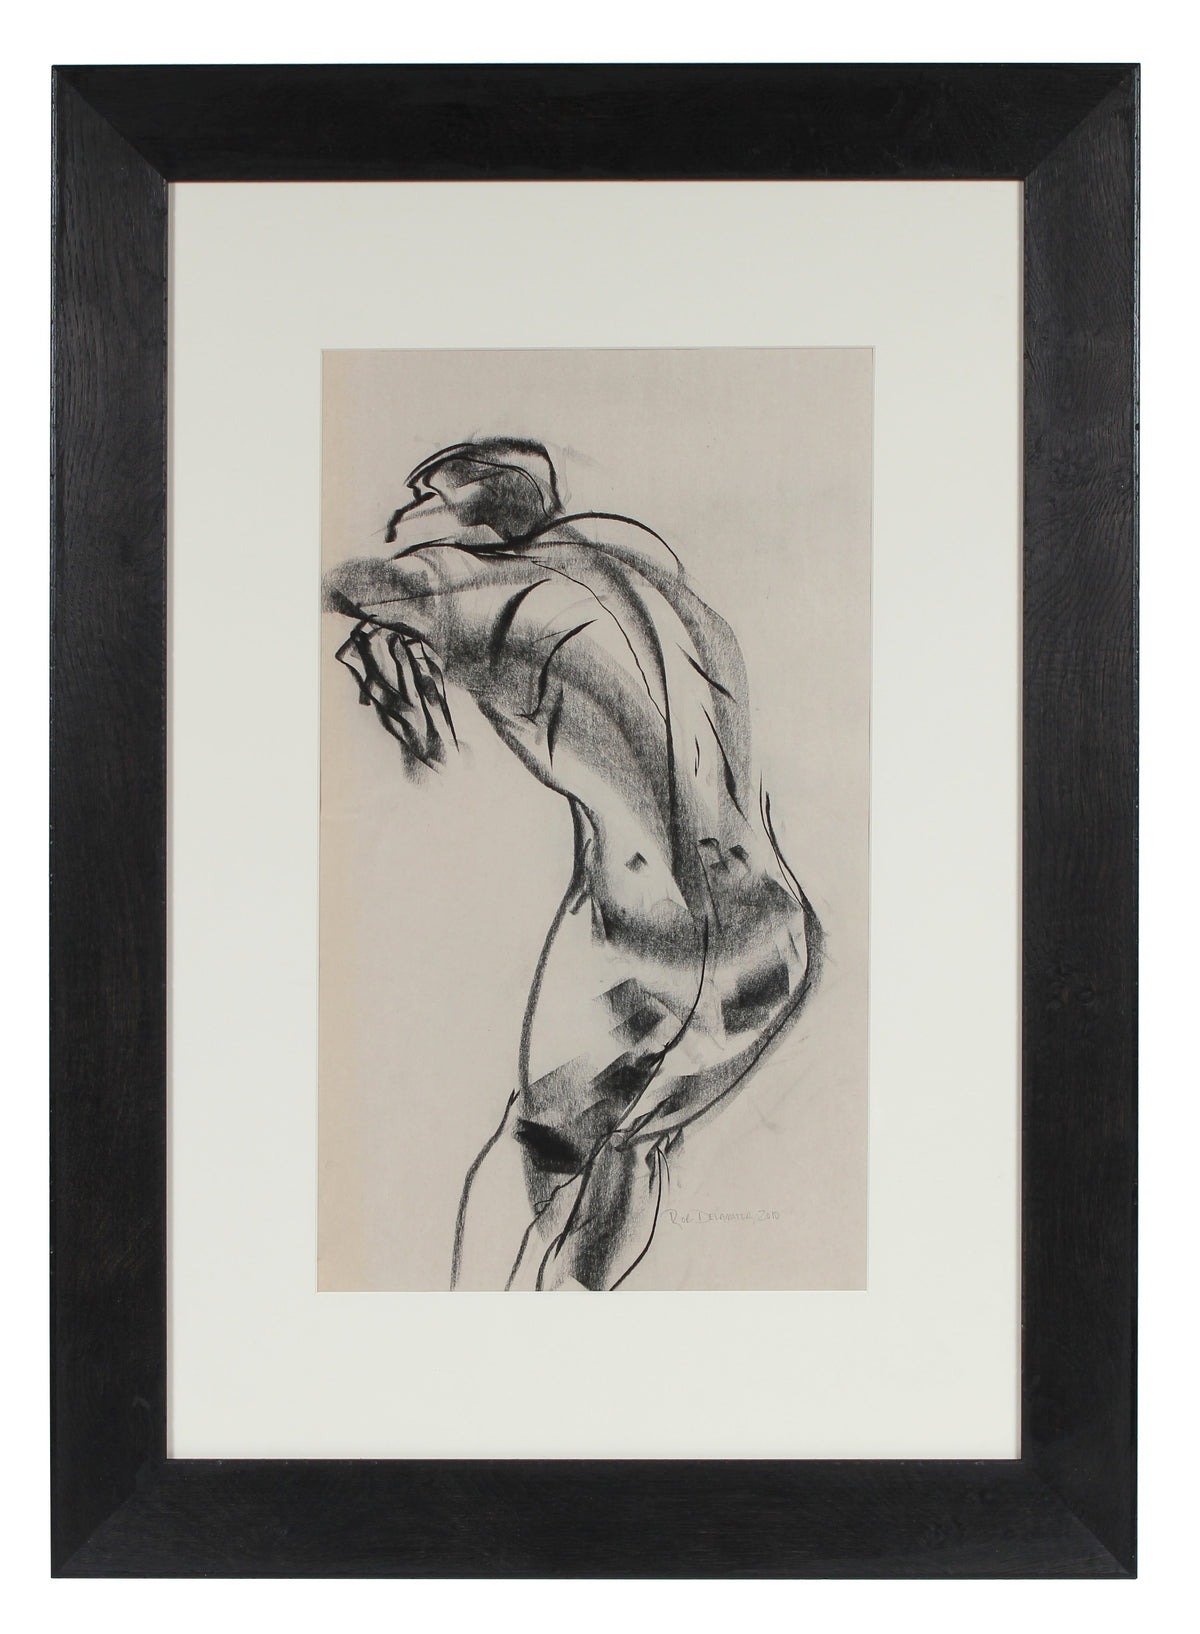 Abstracted Nude Form &lt;br&gt;2010 Charcoal on Newsprint &lt;br&gt;&lt;br&gt;#32850